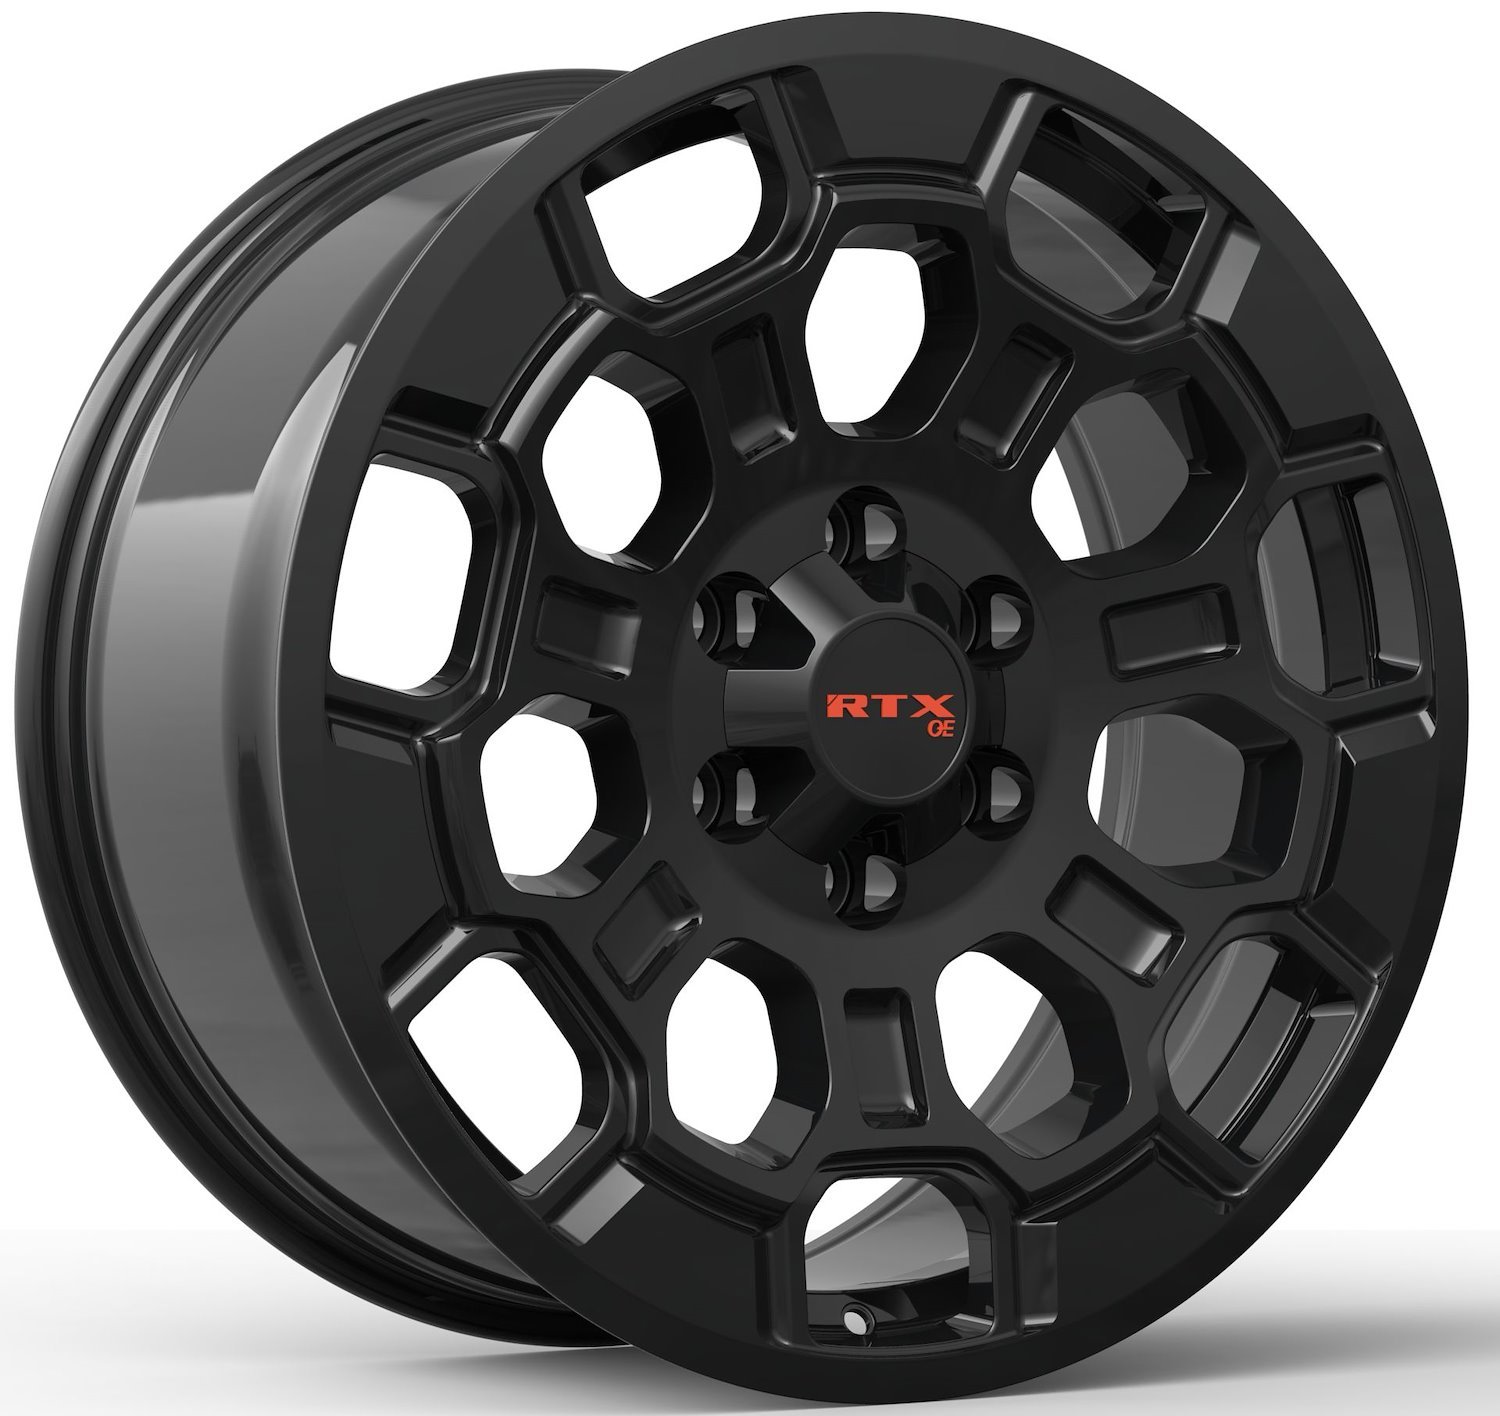 083168 OE-Series TY-03 Wheel [Size: 18" x 8"] Satin Black Finish